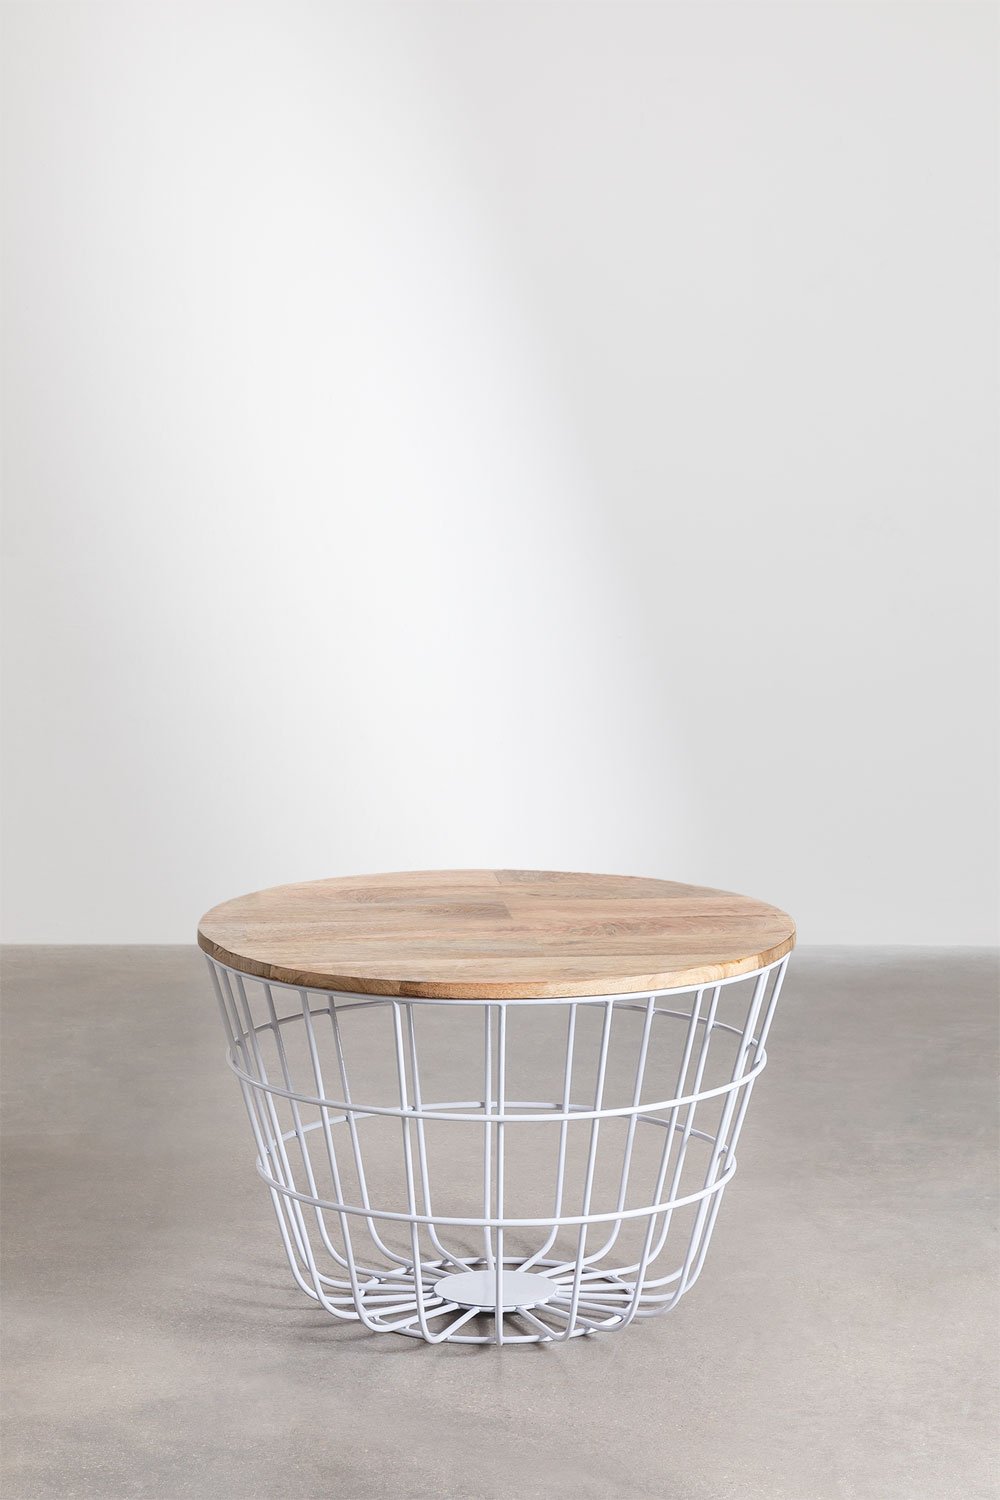 Ronde salontafel in mangohout en staal (Ø62 cm) Ket , galerij beeld 1